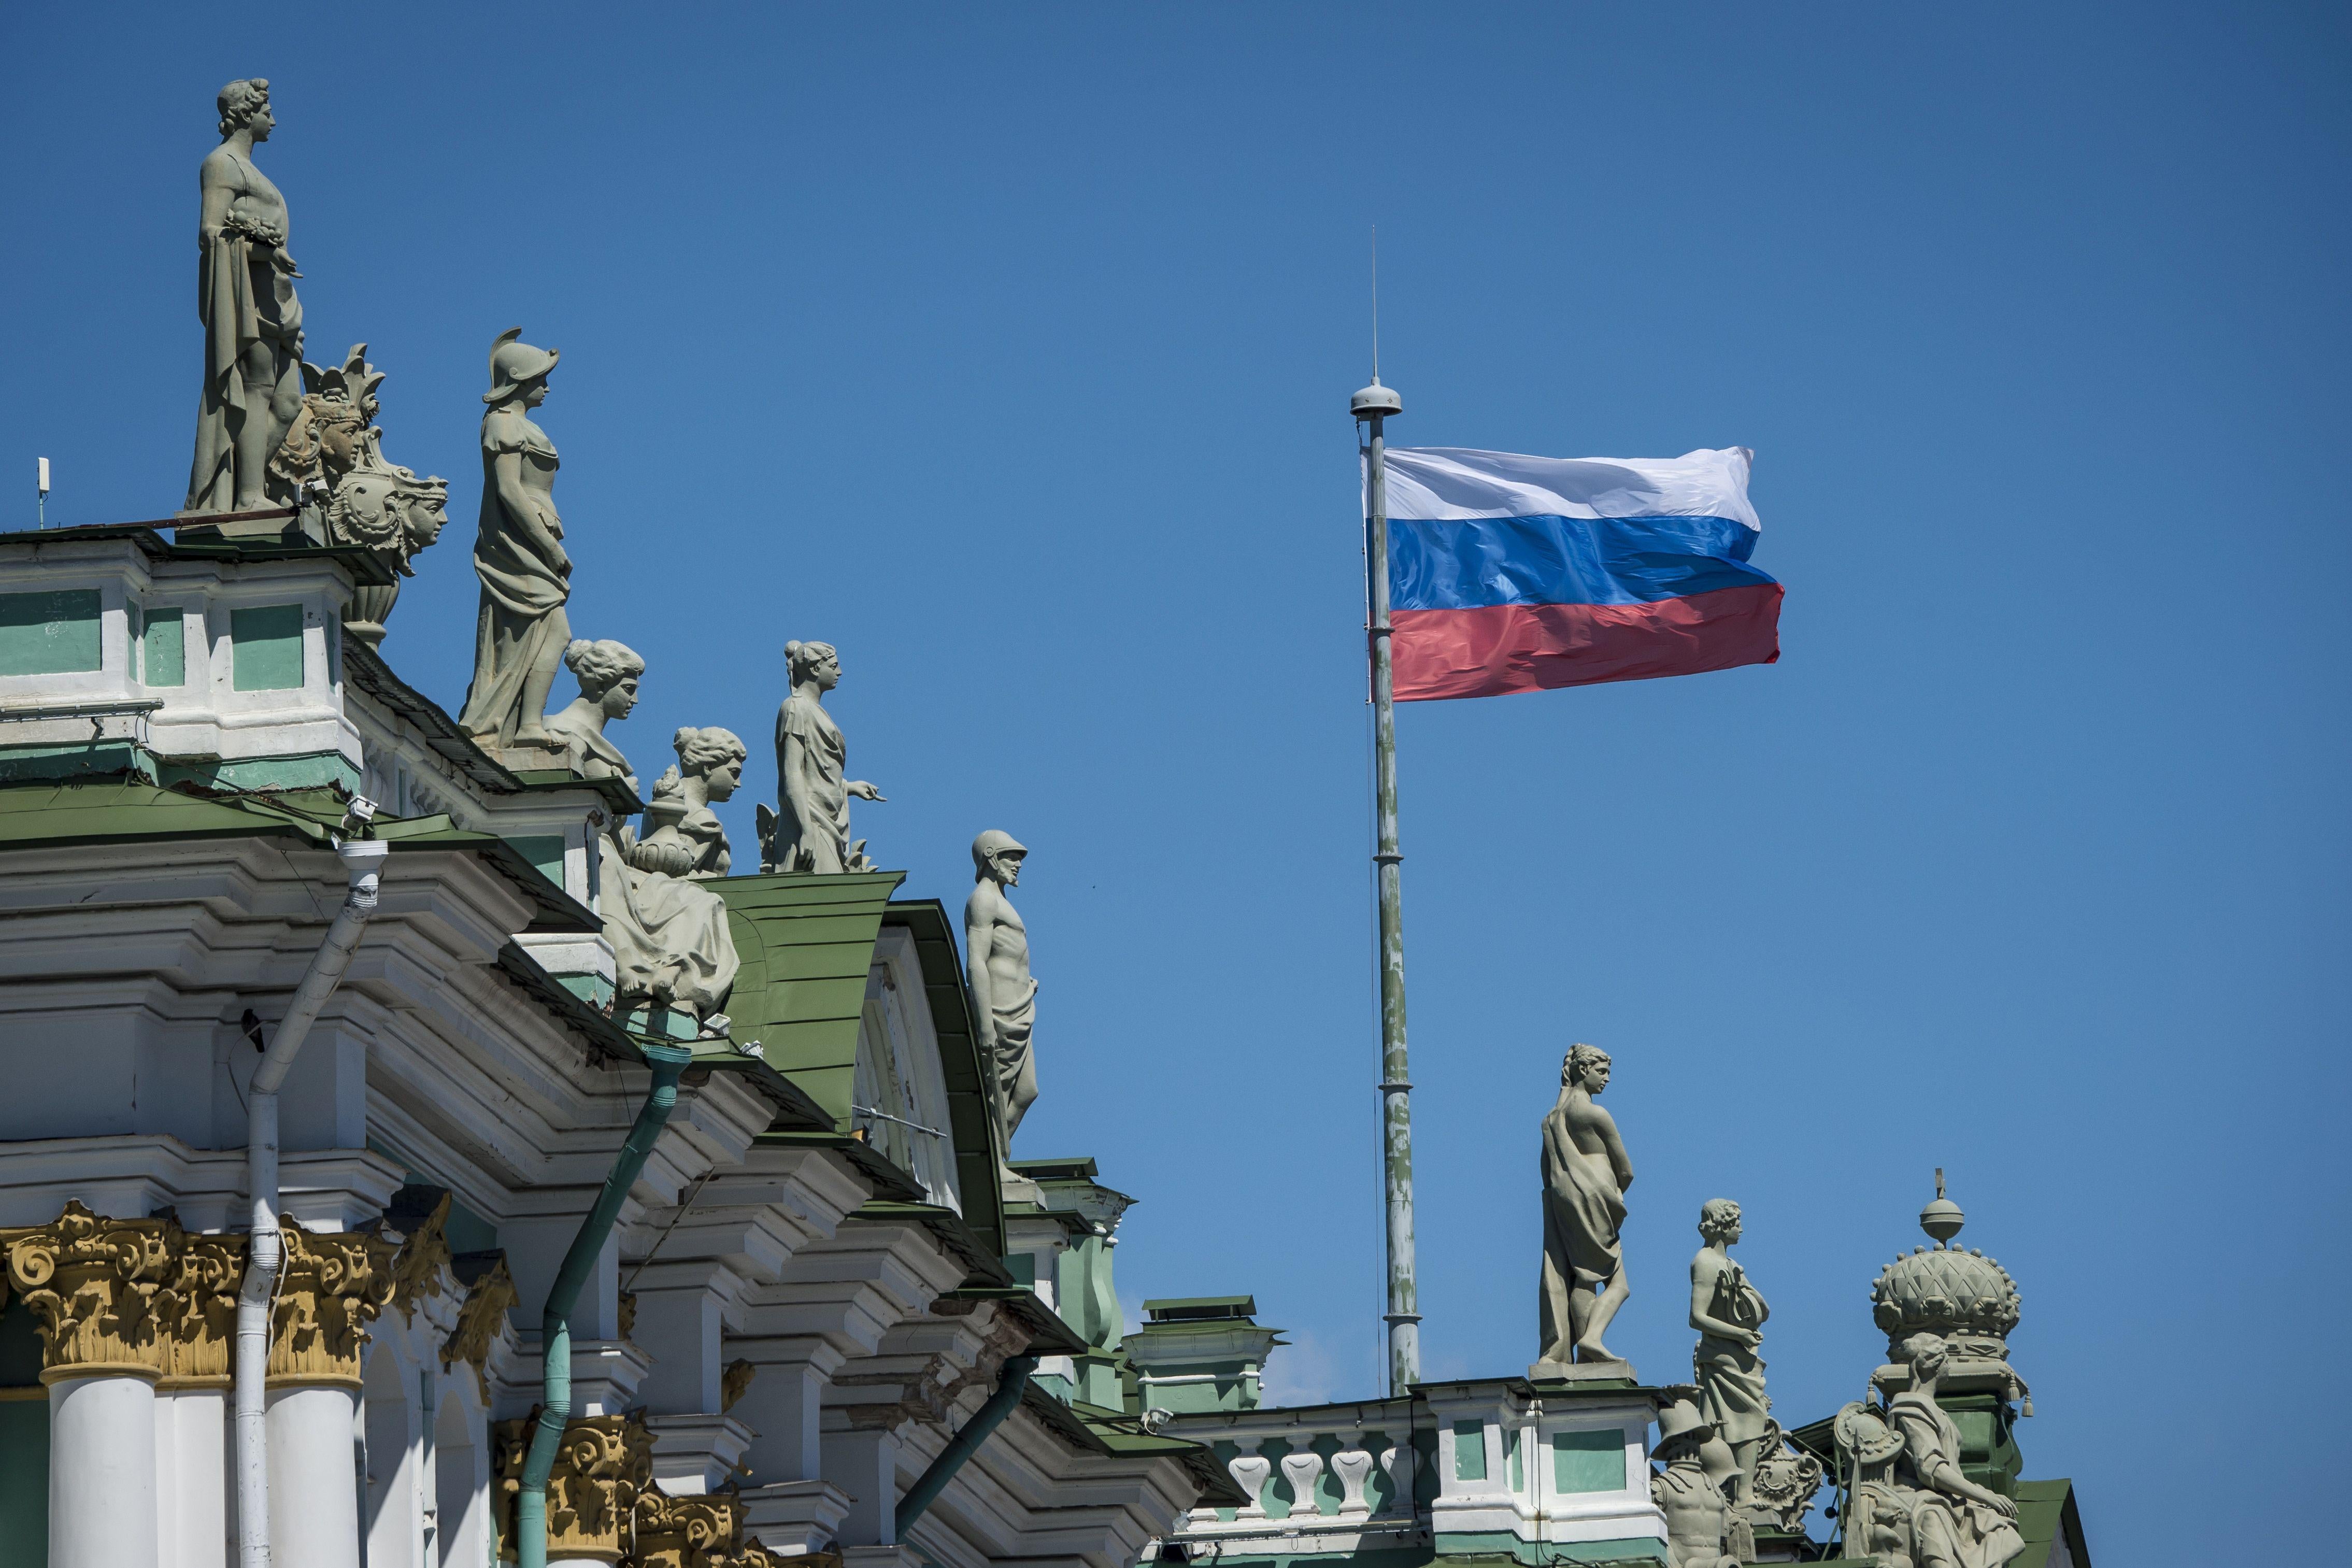 A Russian flag flies over a building.